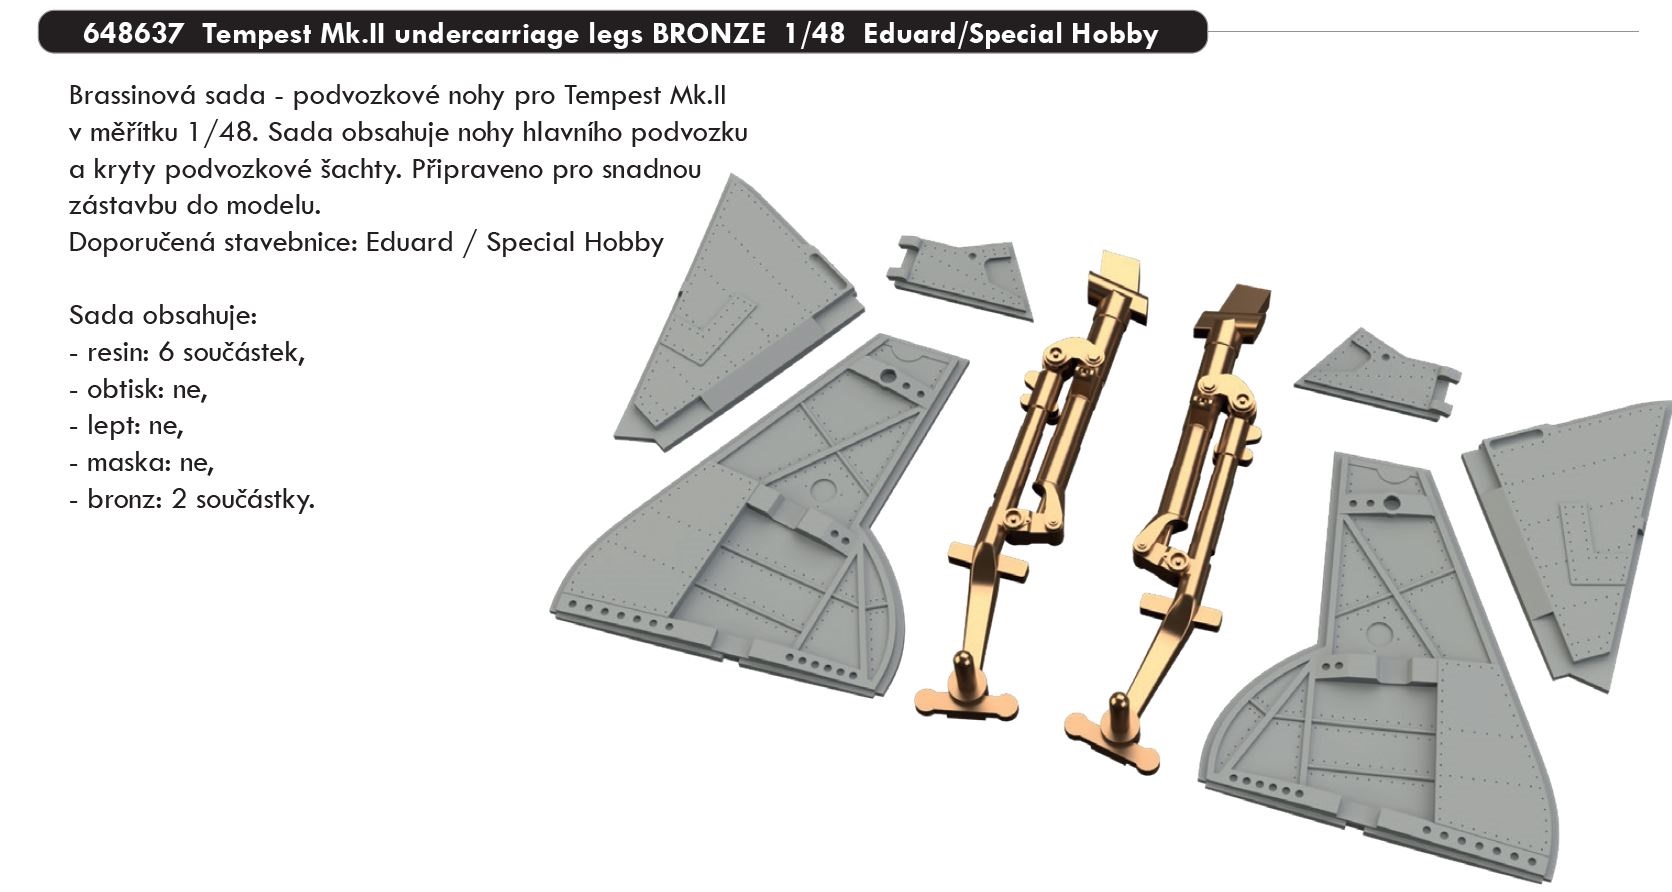 1/48 Tempest Mk.II undercarriage legs BRONZE (EDUARD/SPECIAL HOBBY)